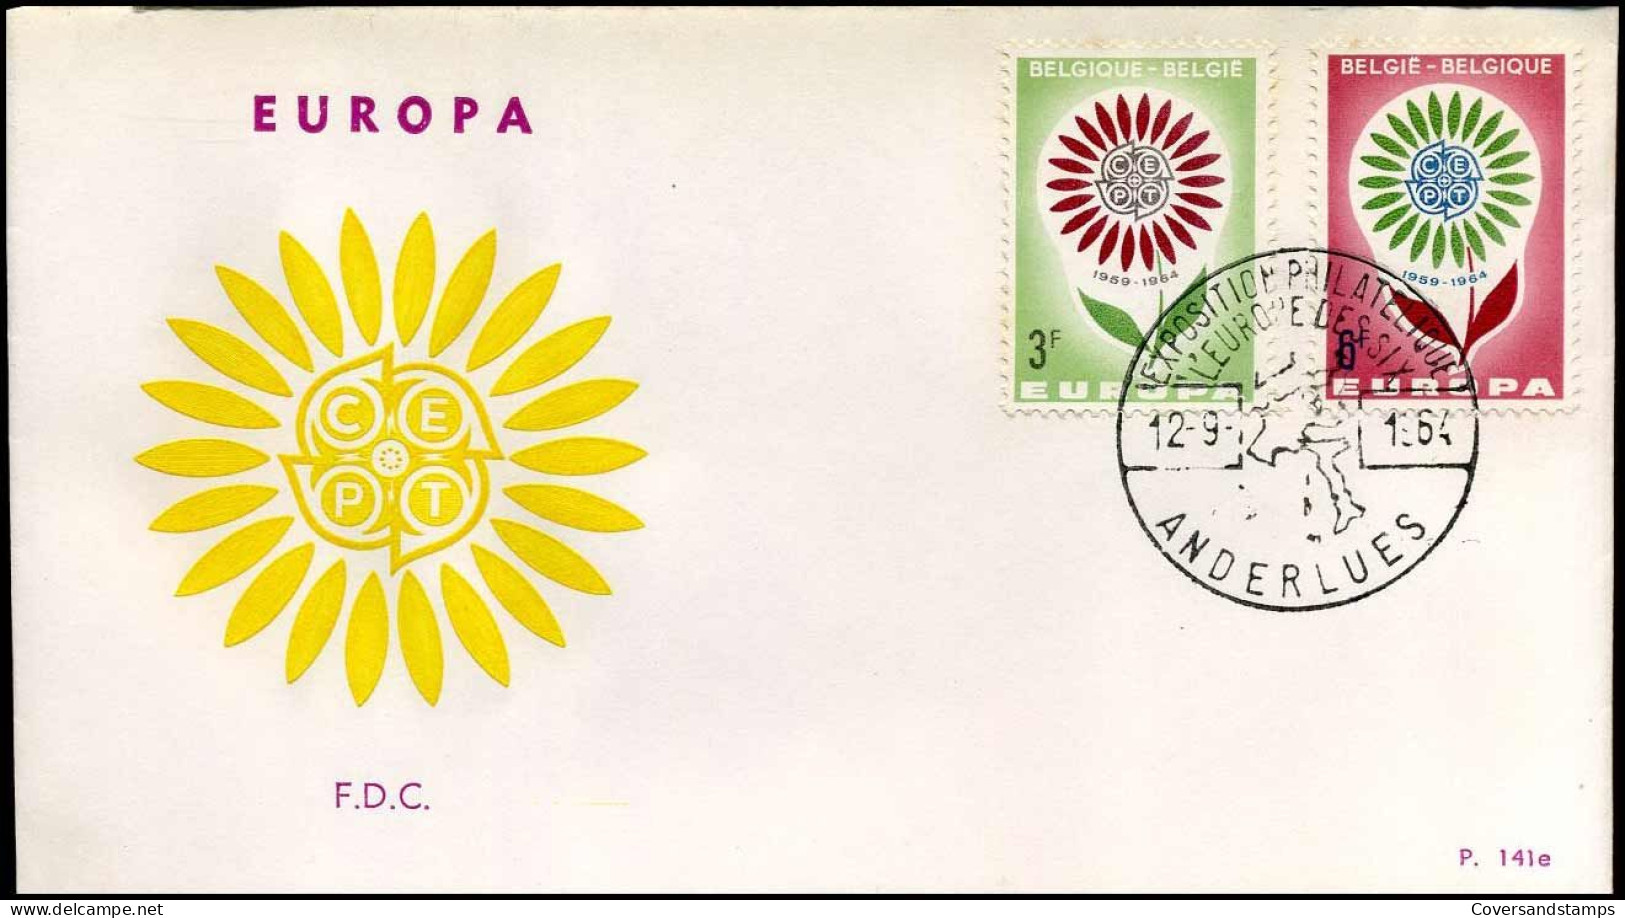 België - FDC - Europa CEPT 1964 - 1964